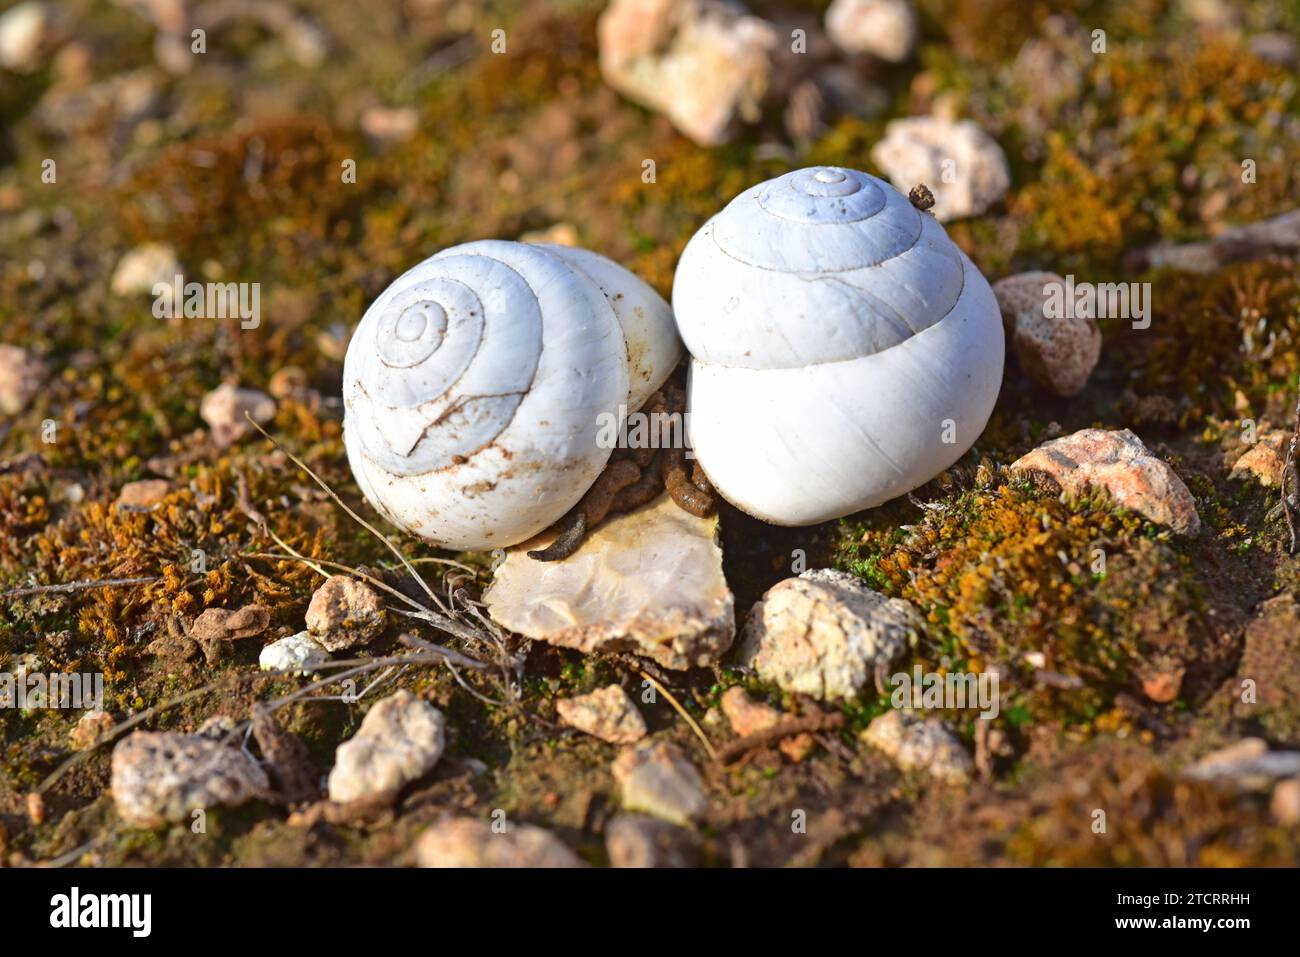 Caracol blanco, serrana or vaqueta (Iberus gualterianus alonensis) is a terrestrial snail endemic to eastern Spain. Copula. This photo was taken near Stock Photo